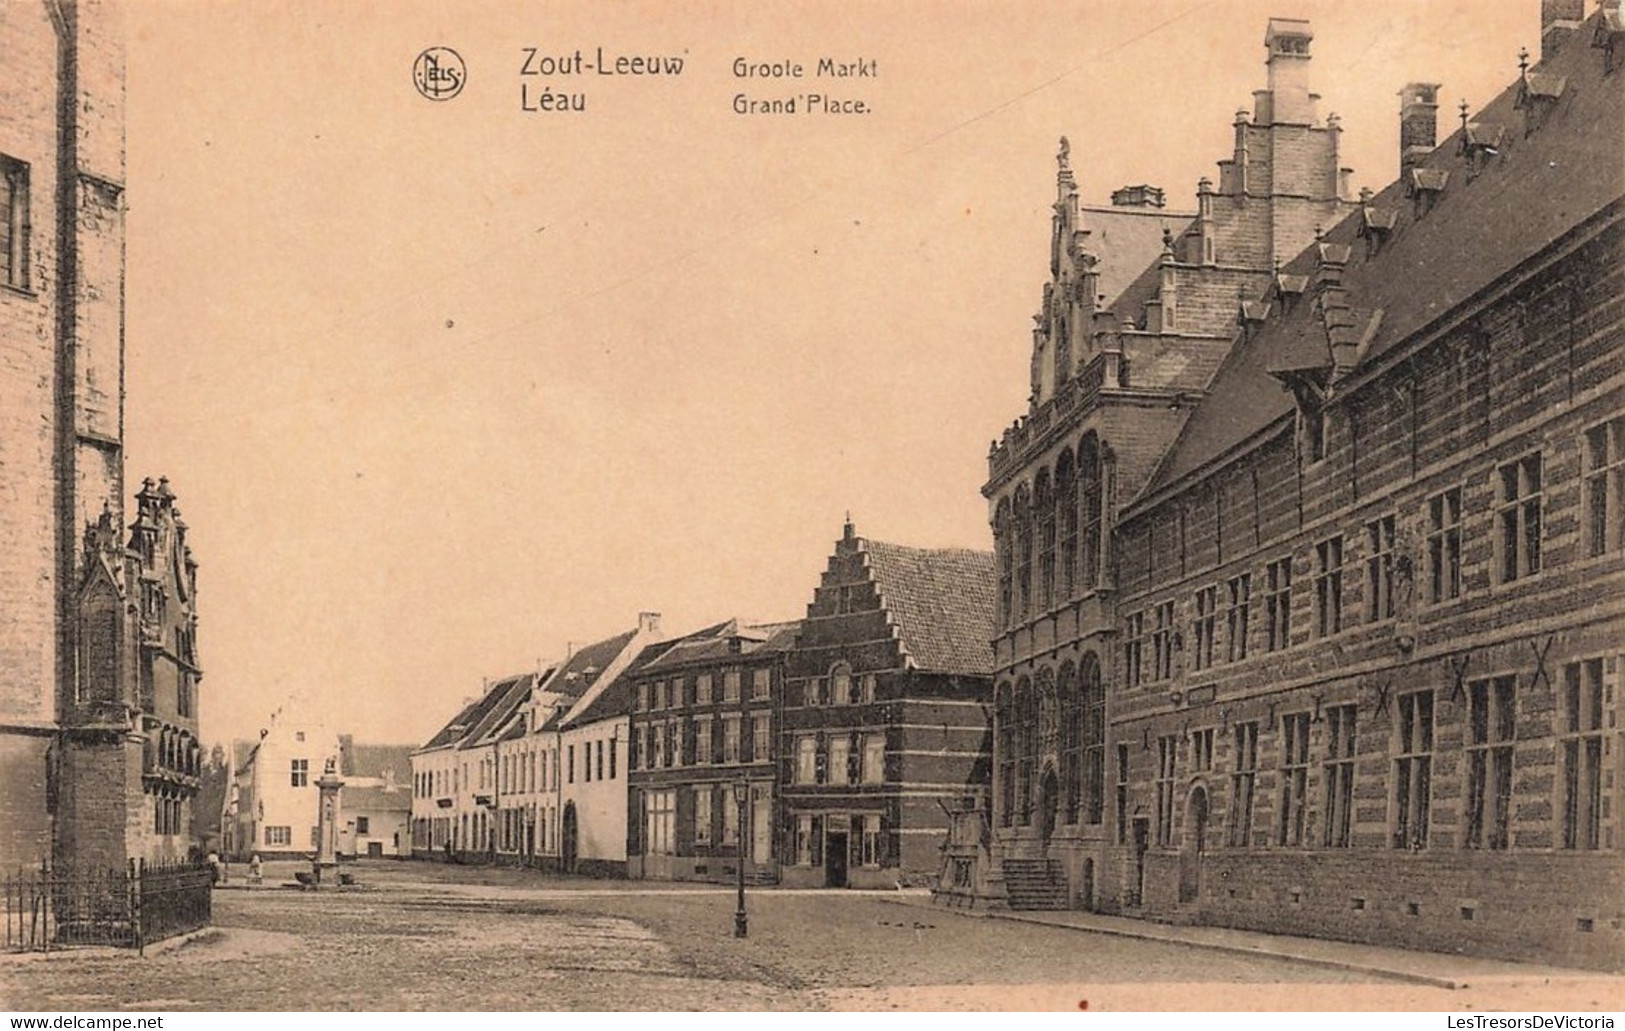 Belgique - Léau - Zoutleeuw -Groote Markt - Grand Place - Edit. Nels - Ch. Peeters - Carte Postale Ancienne - Zoutleeuw